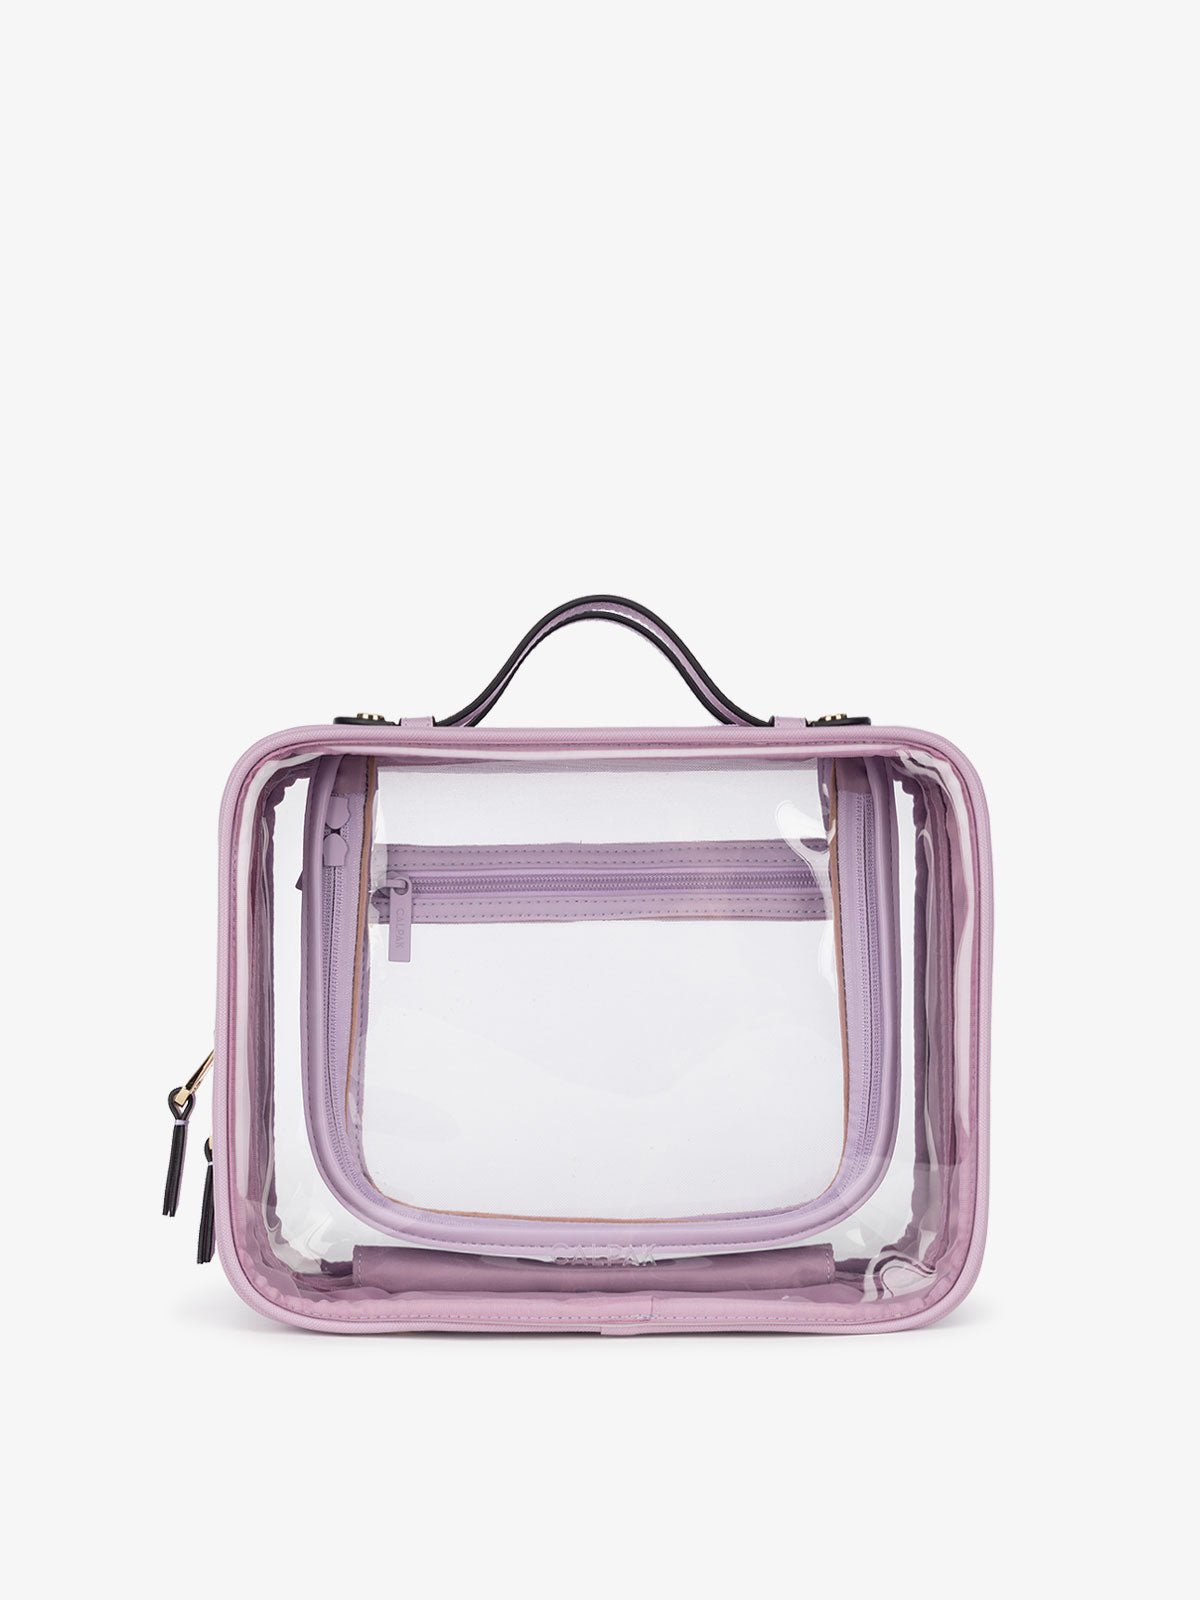 CALPAK transparent cosmetic bag in lavender purple